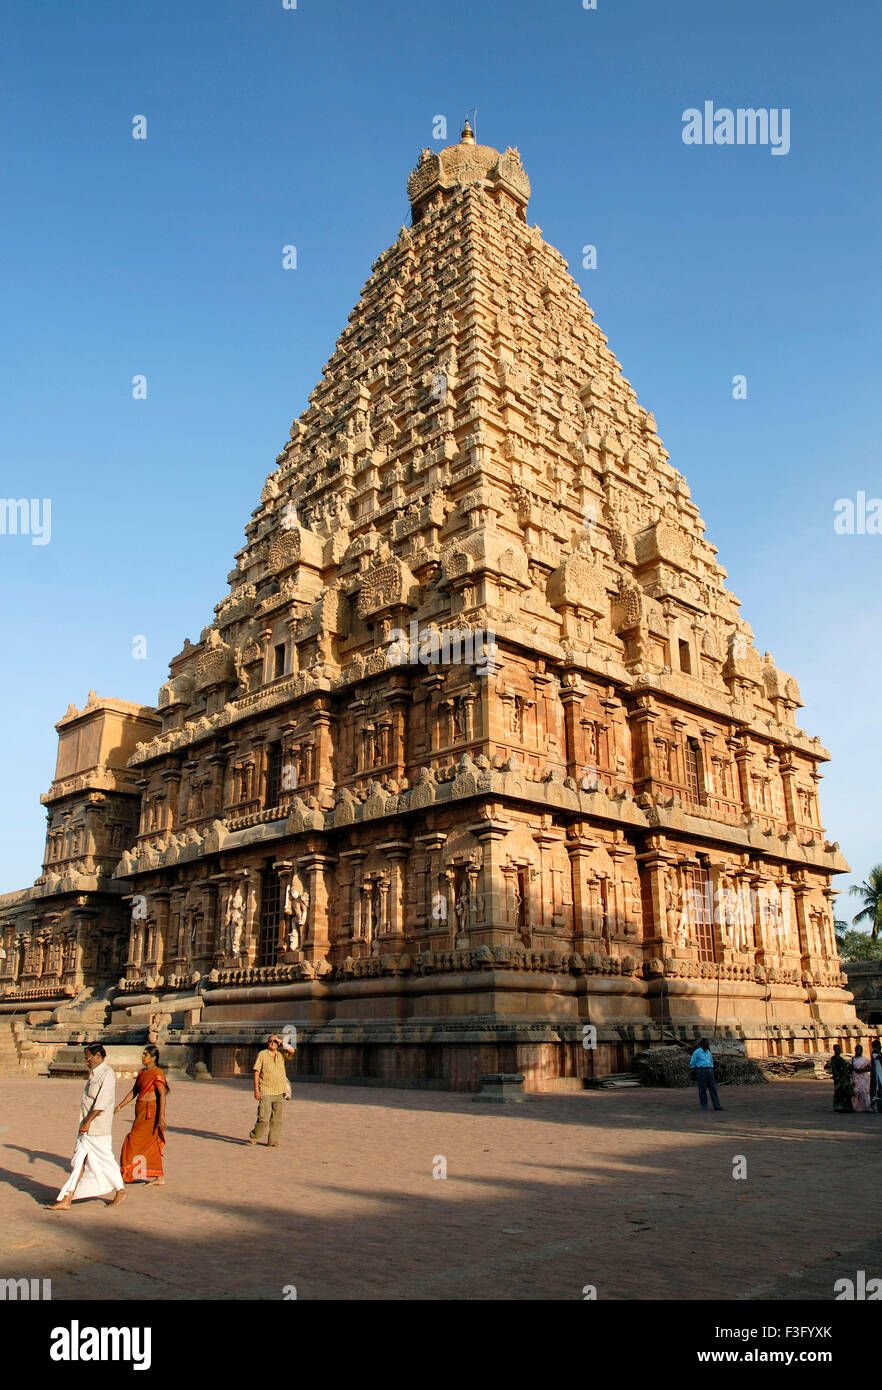 Brihadishvara Temple, appelé aussi Rajarajesvaram Peruvudaiyar ou Kovil, est un temple Chola hindou Thanjavur ; Tamil Nadu Inde ; Banque D'Images